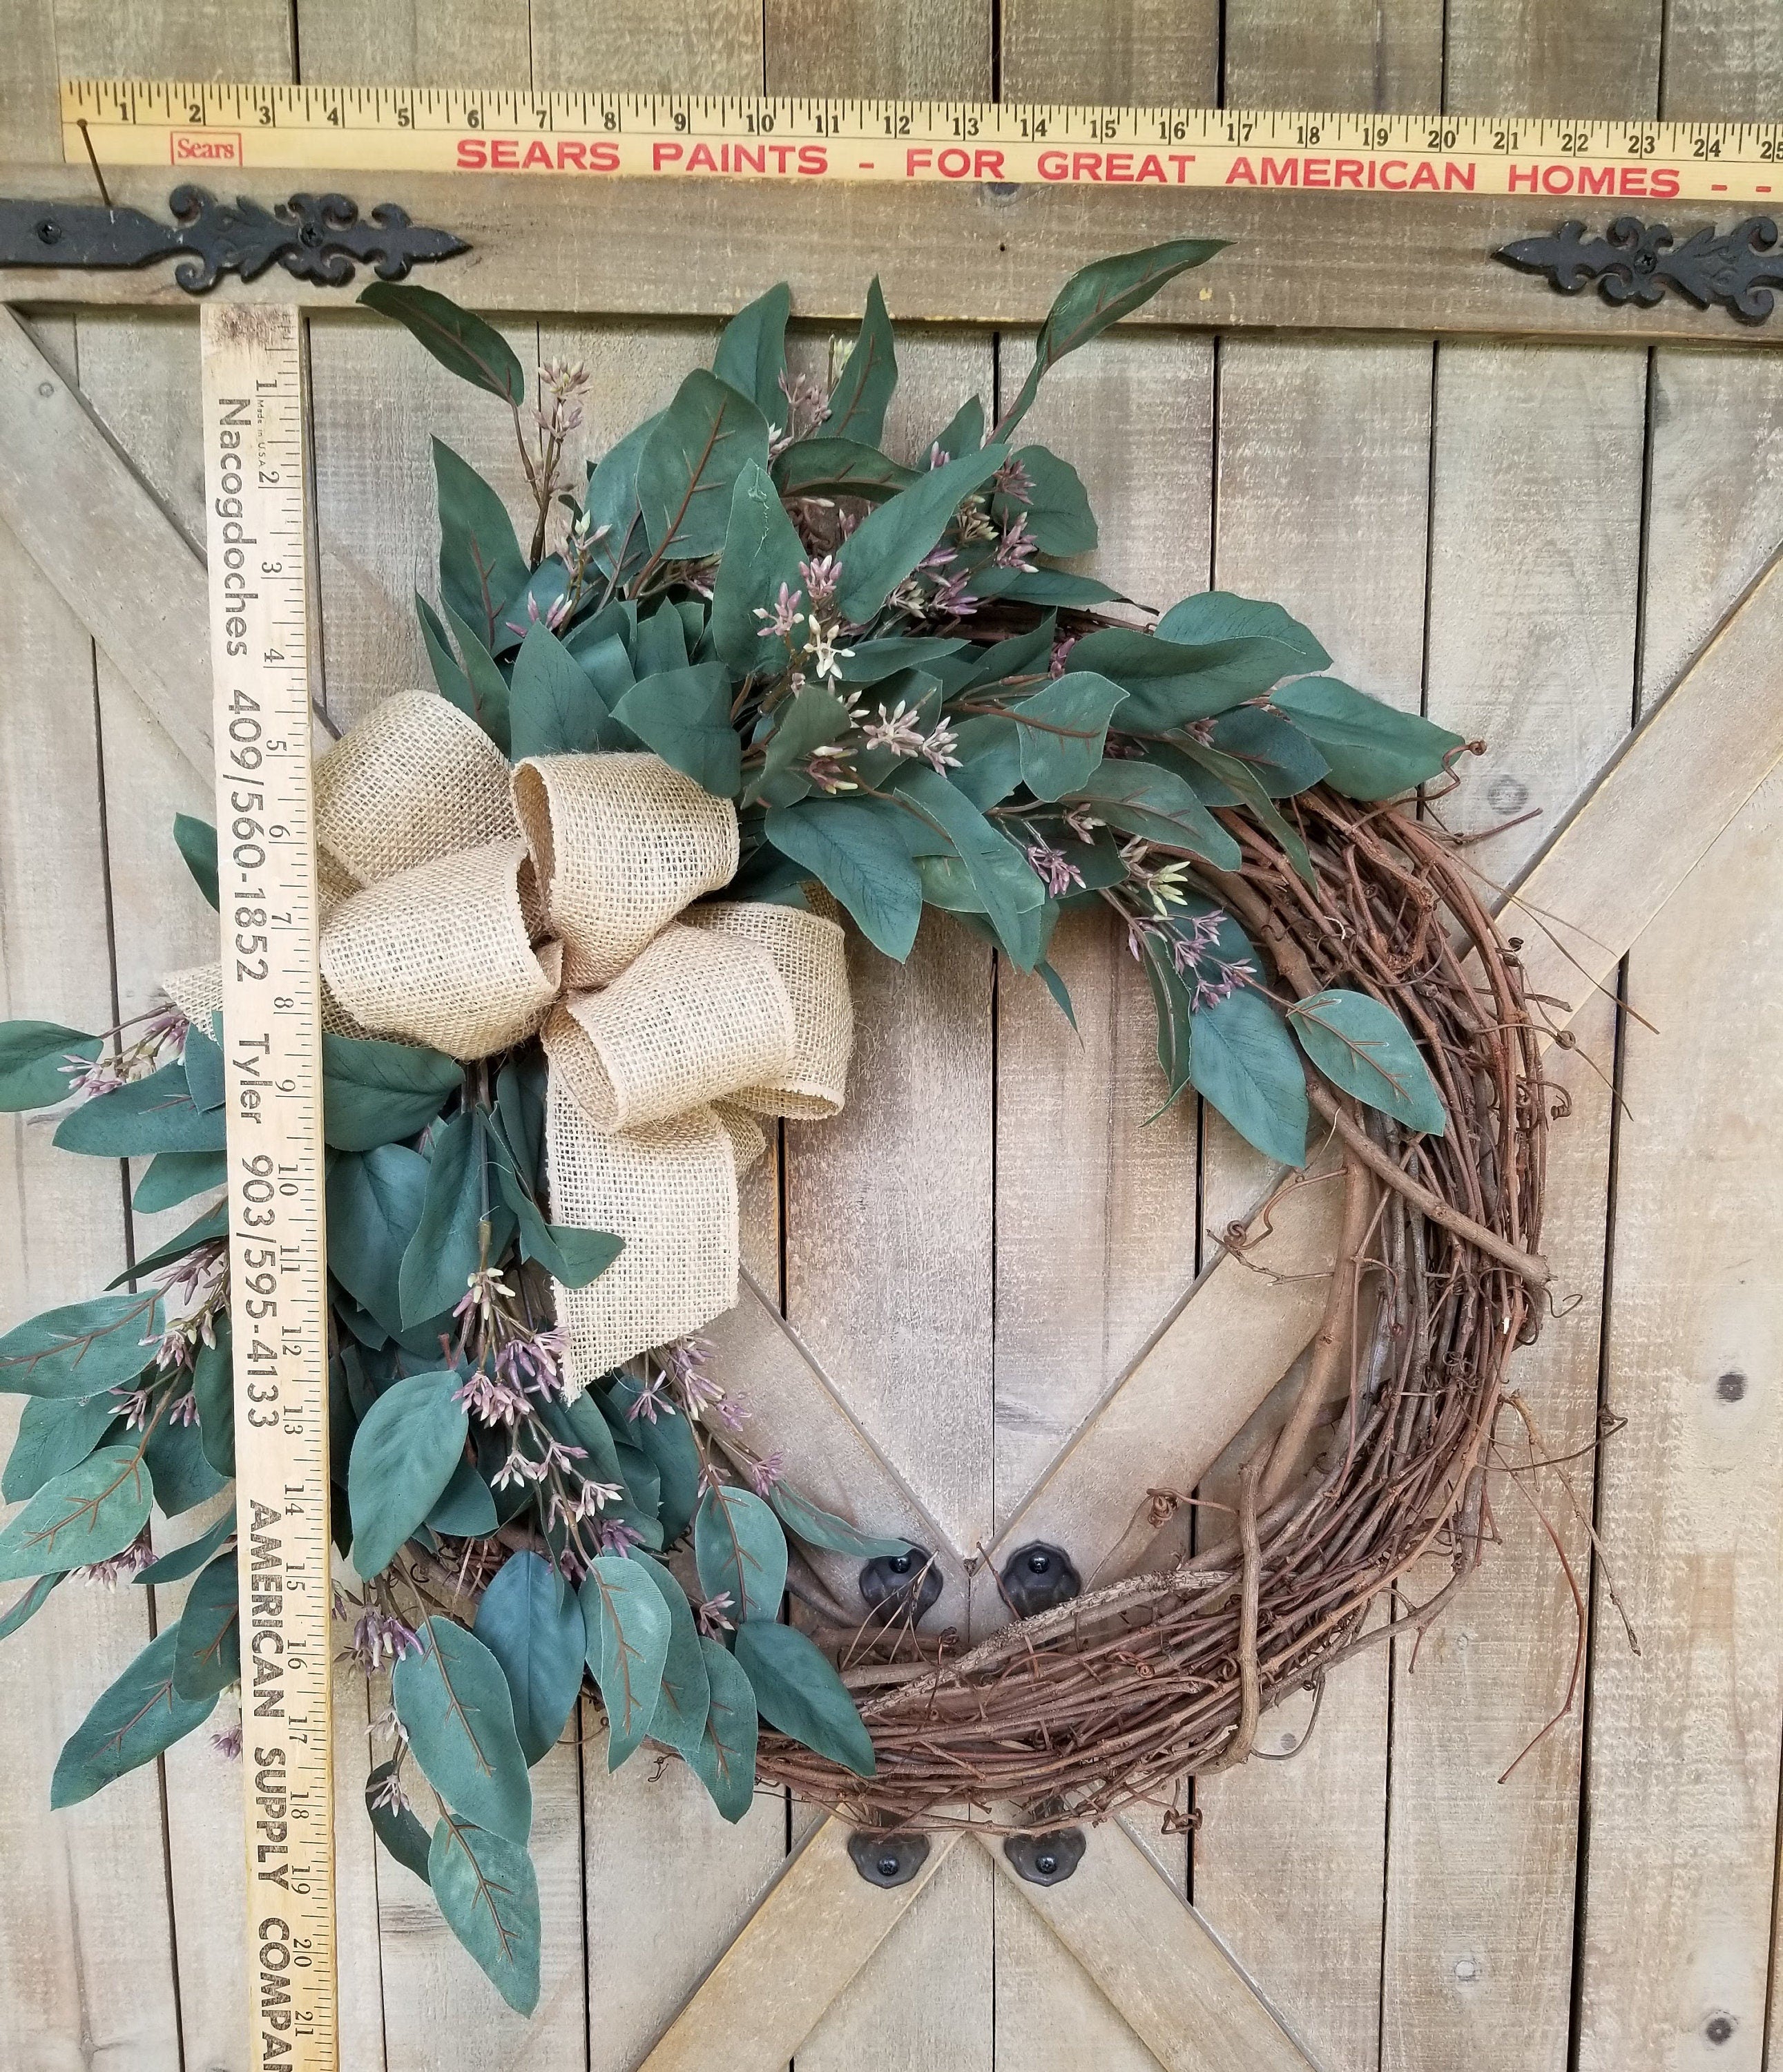 22"  Front door wreaths, Summer wreaths, Home Decor wreaths, Wreath Great for All Year Round - Everyday Wreath, Front door Decor